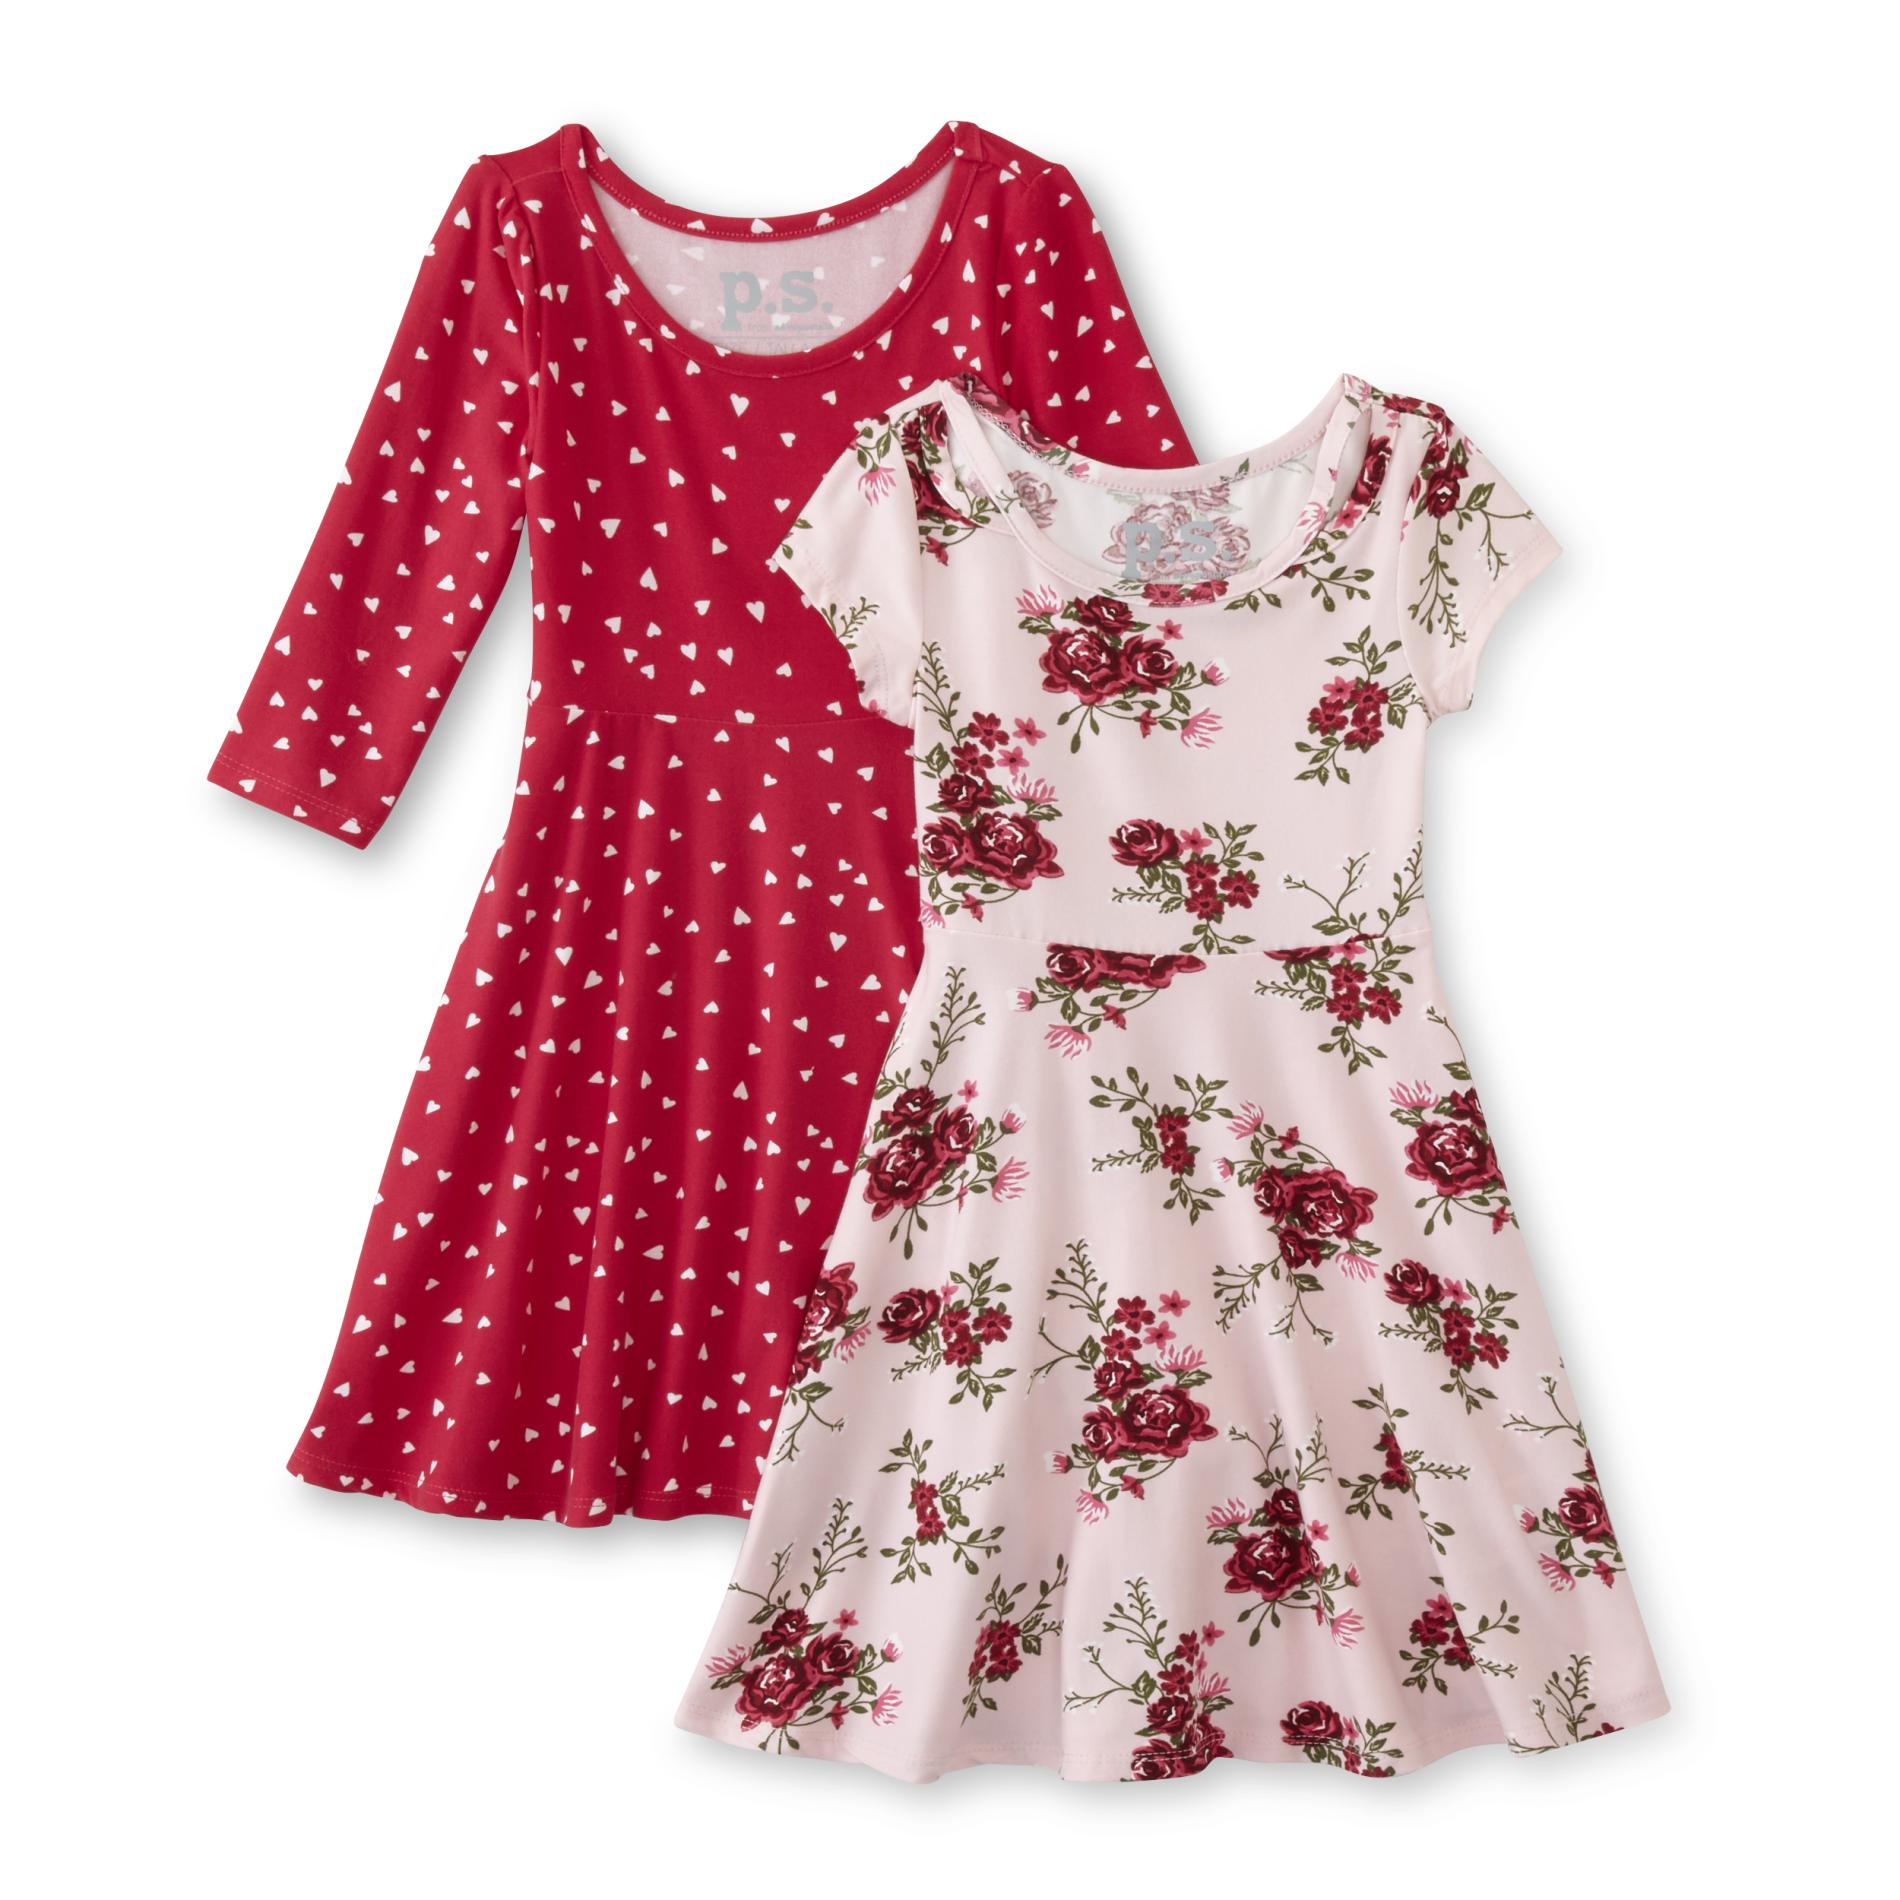 Children's Apparel Toddler Girls' 2-Pack Dresses - Heart/Floral